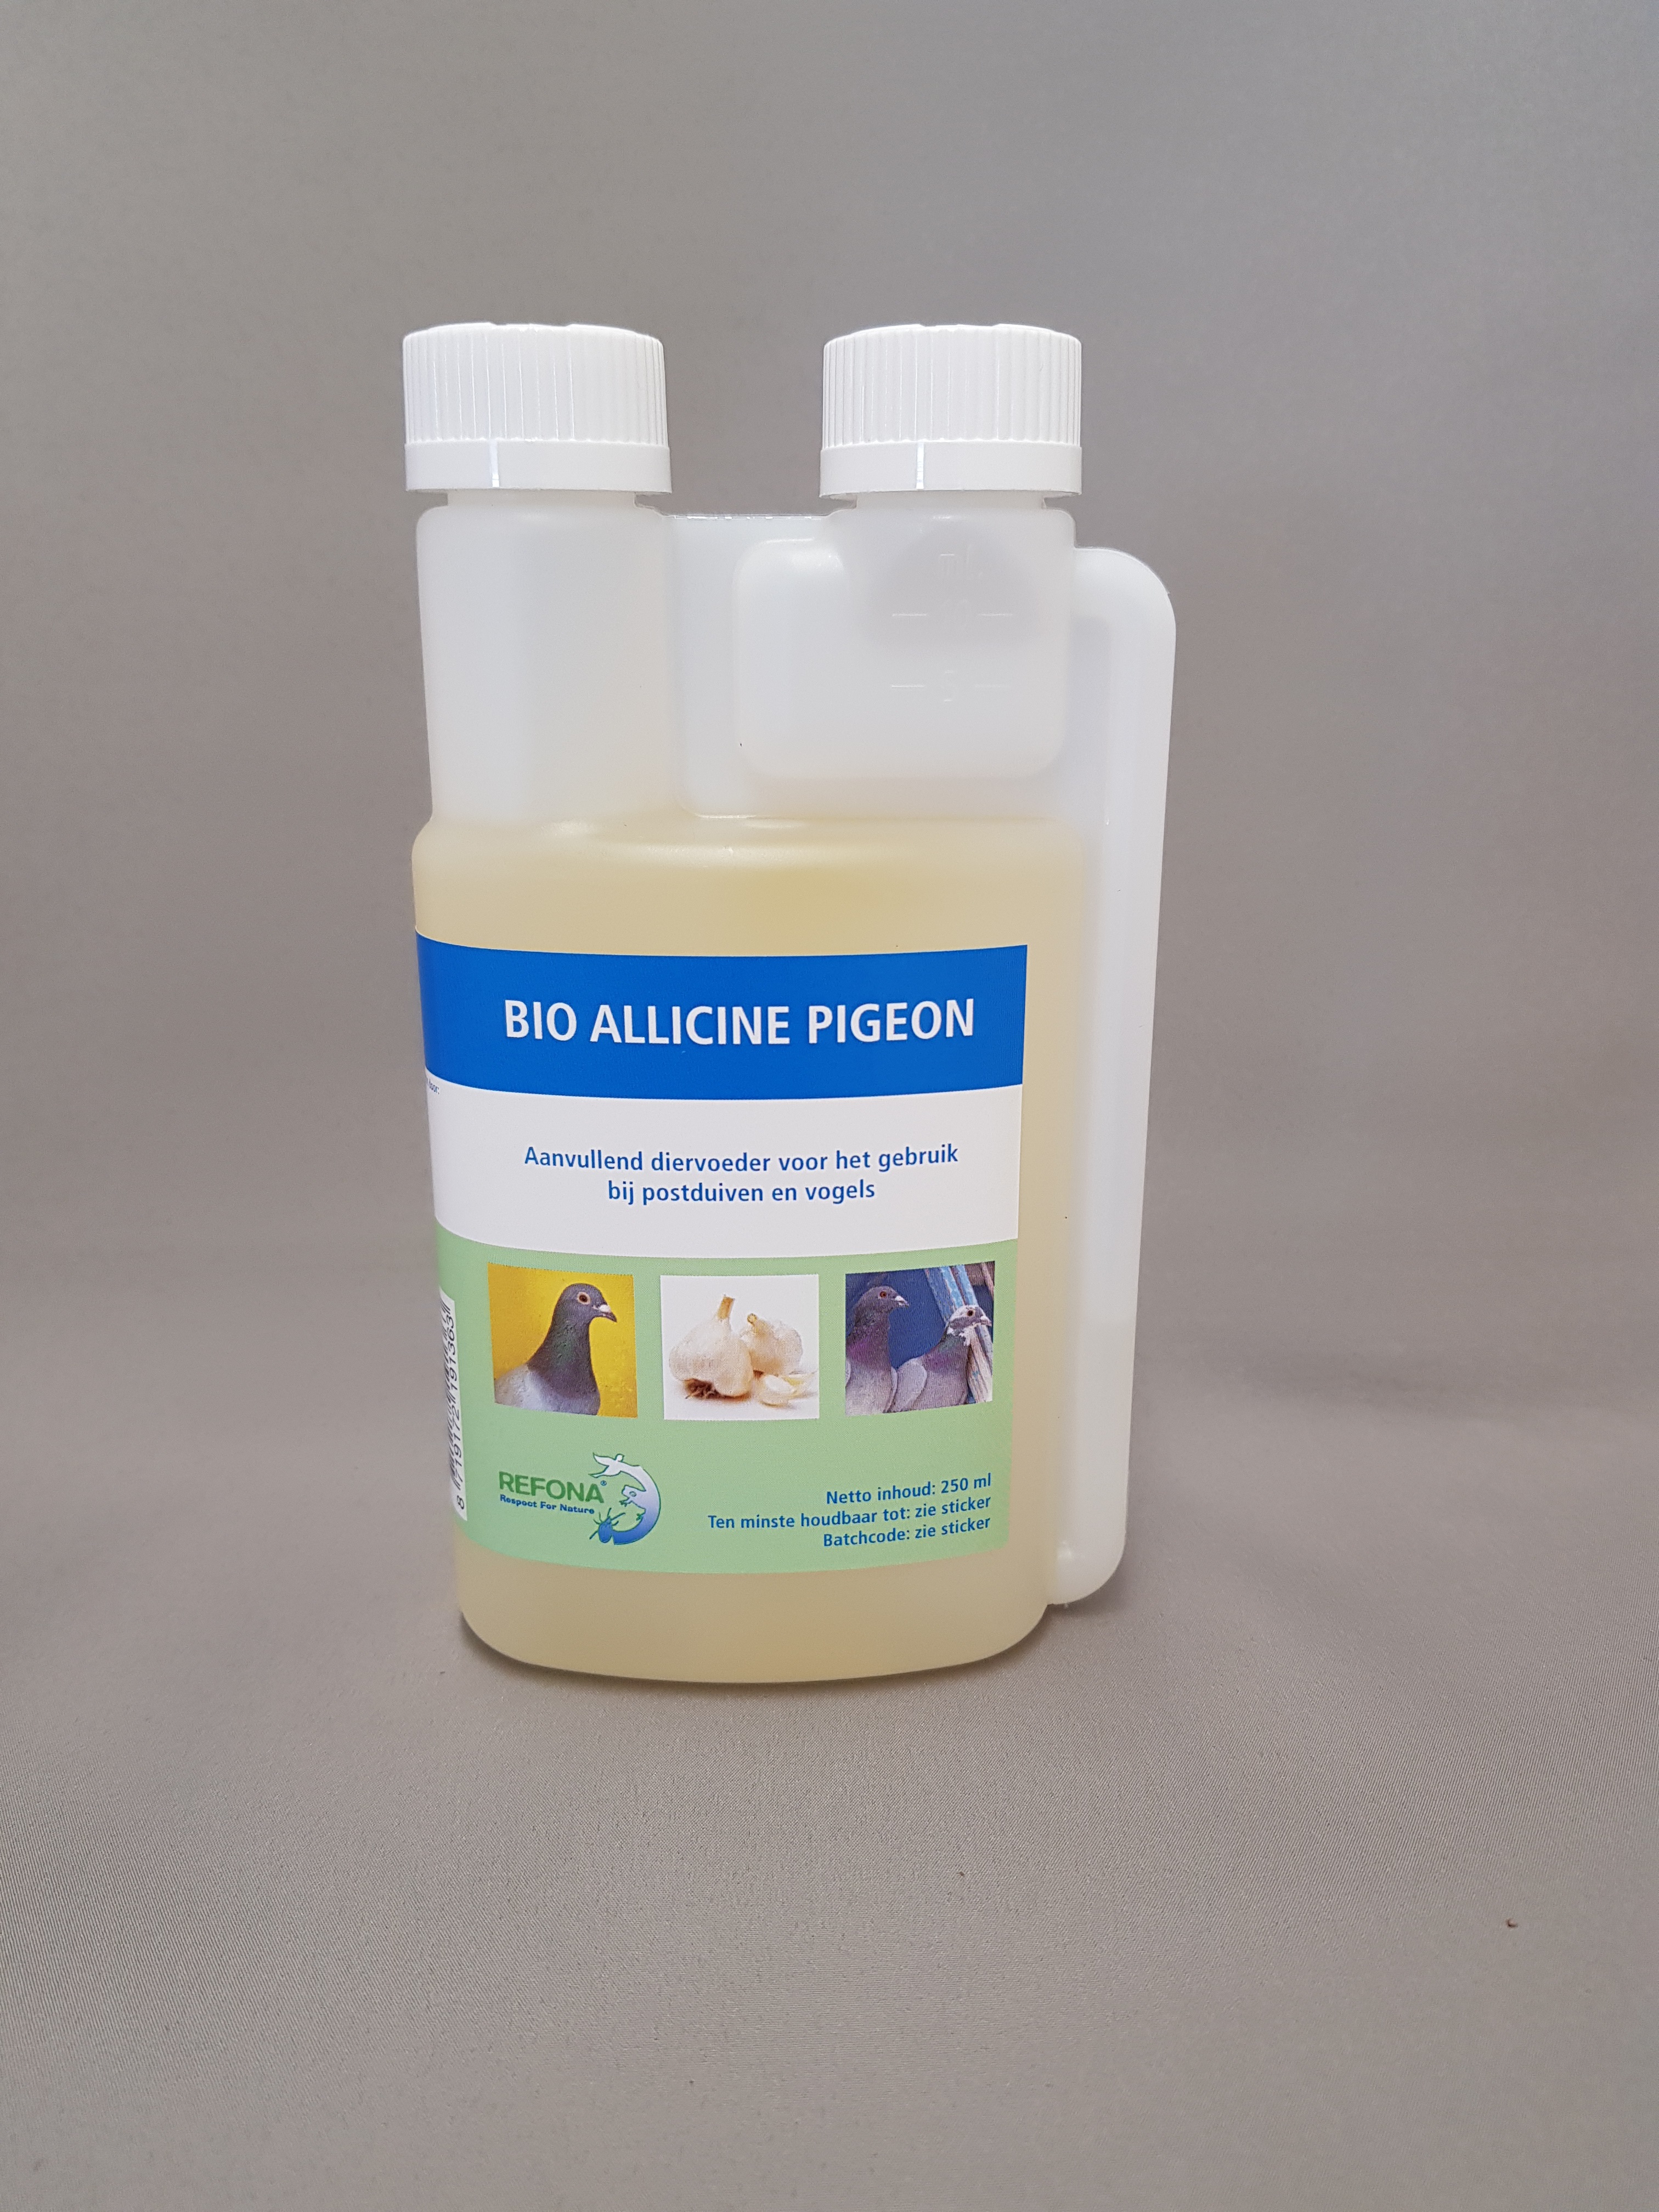 Bio Allicine Pigeon